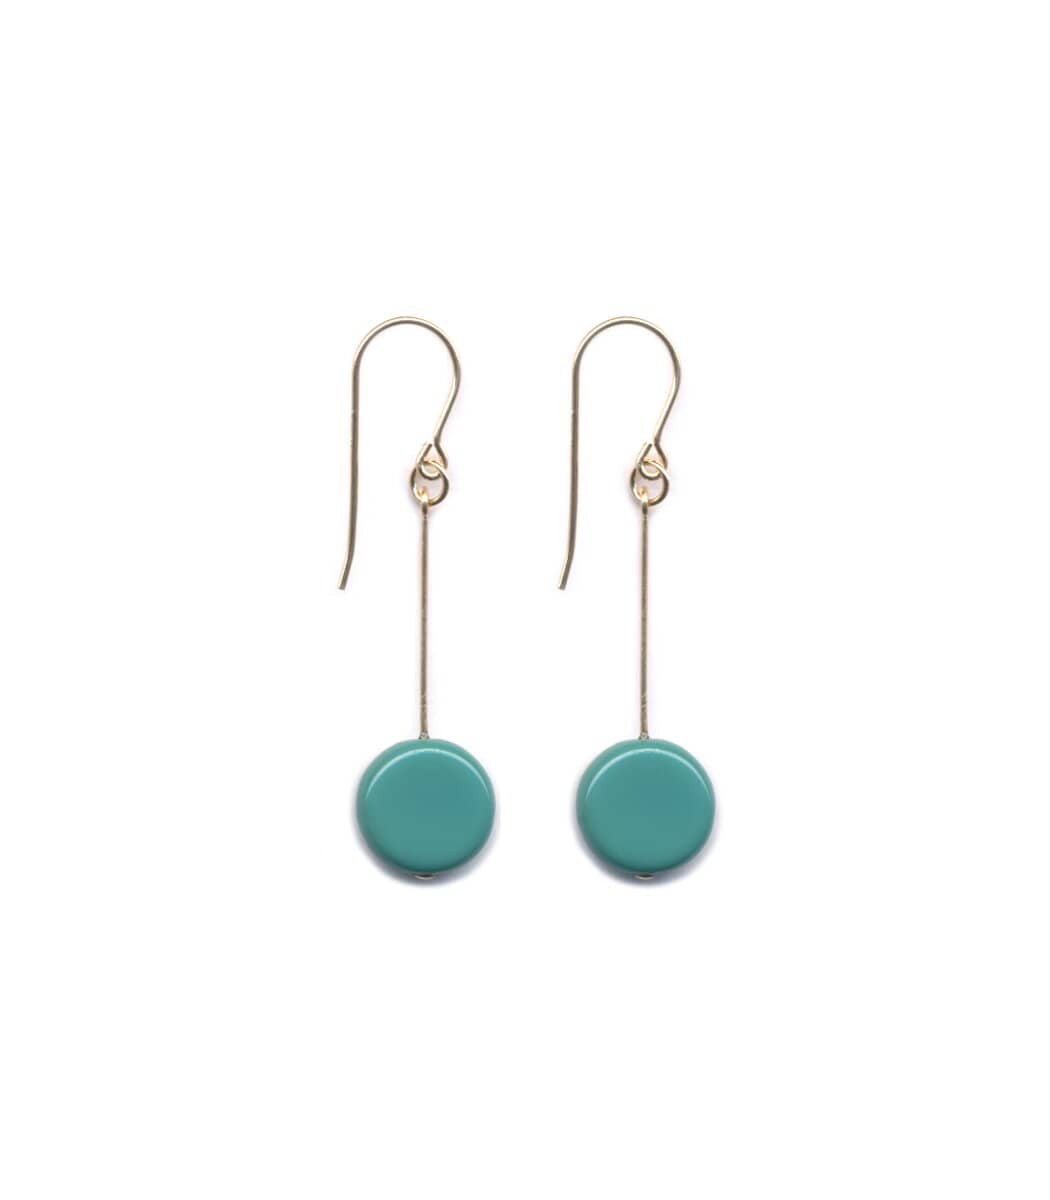 Irk Jewelry I. Ronni Kappos E1128 Turquoise Circle Drop Earrings